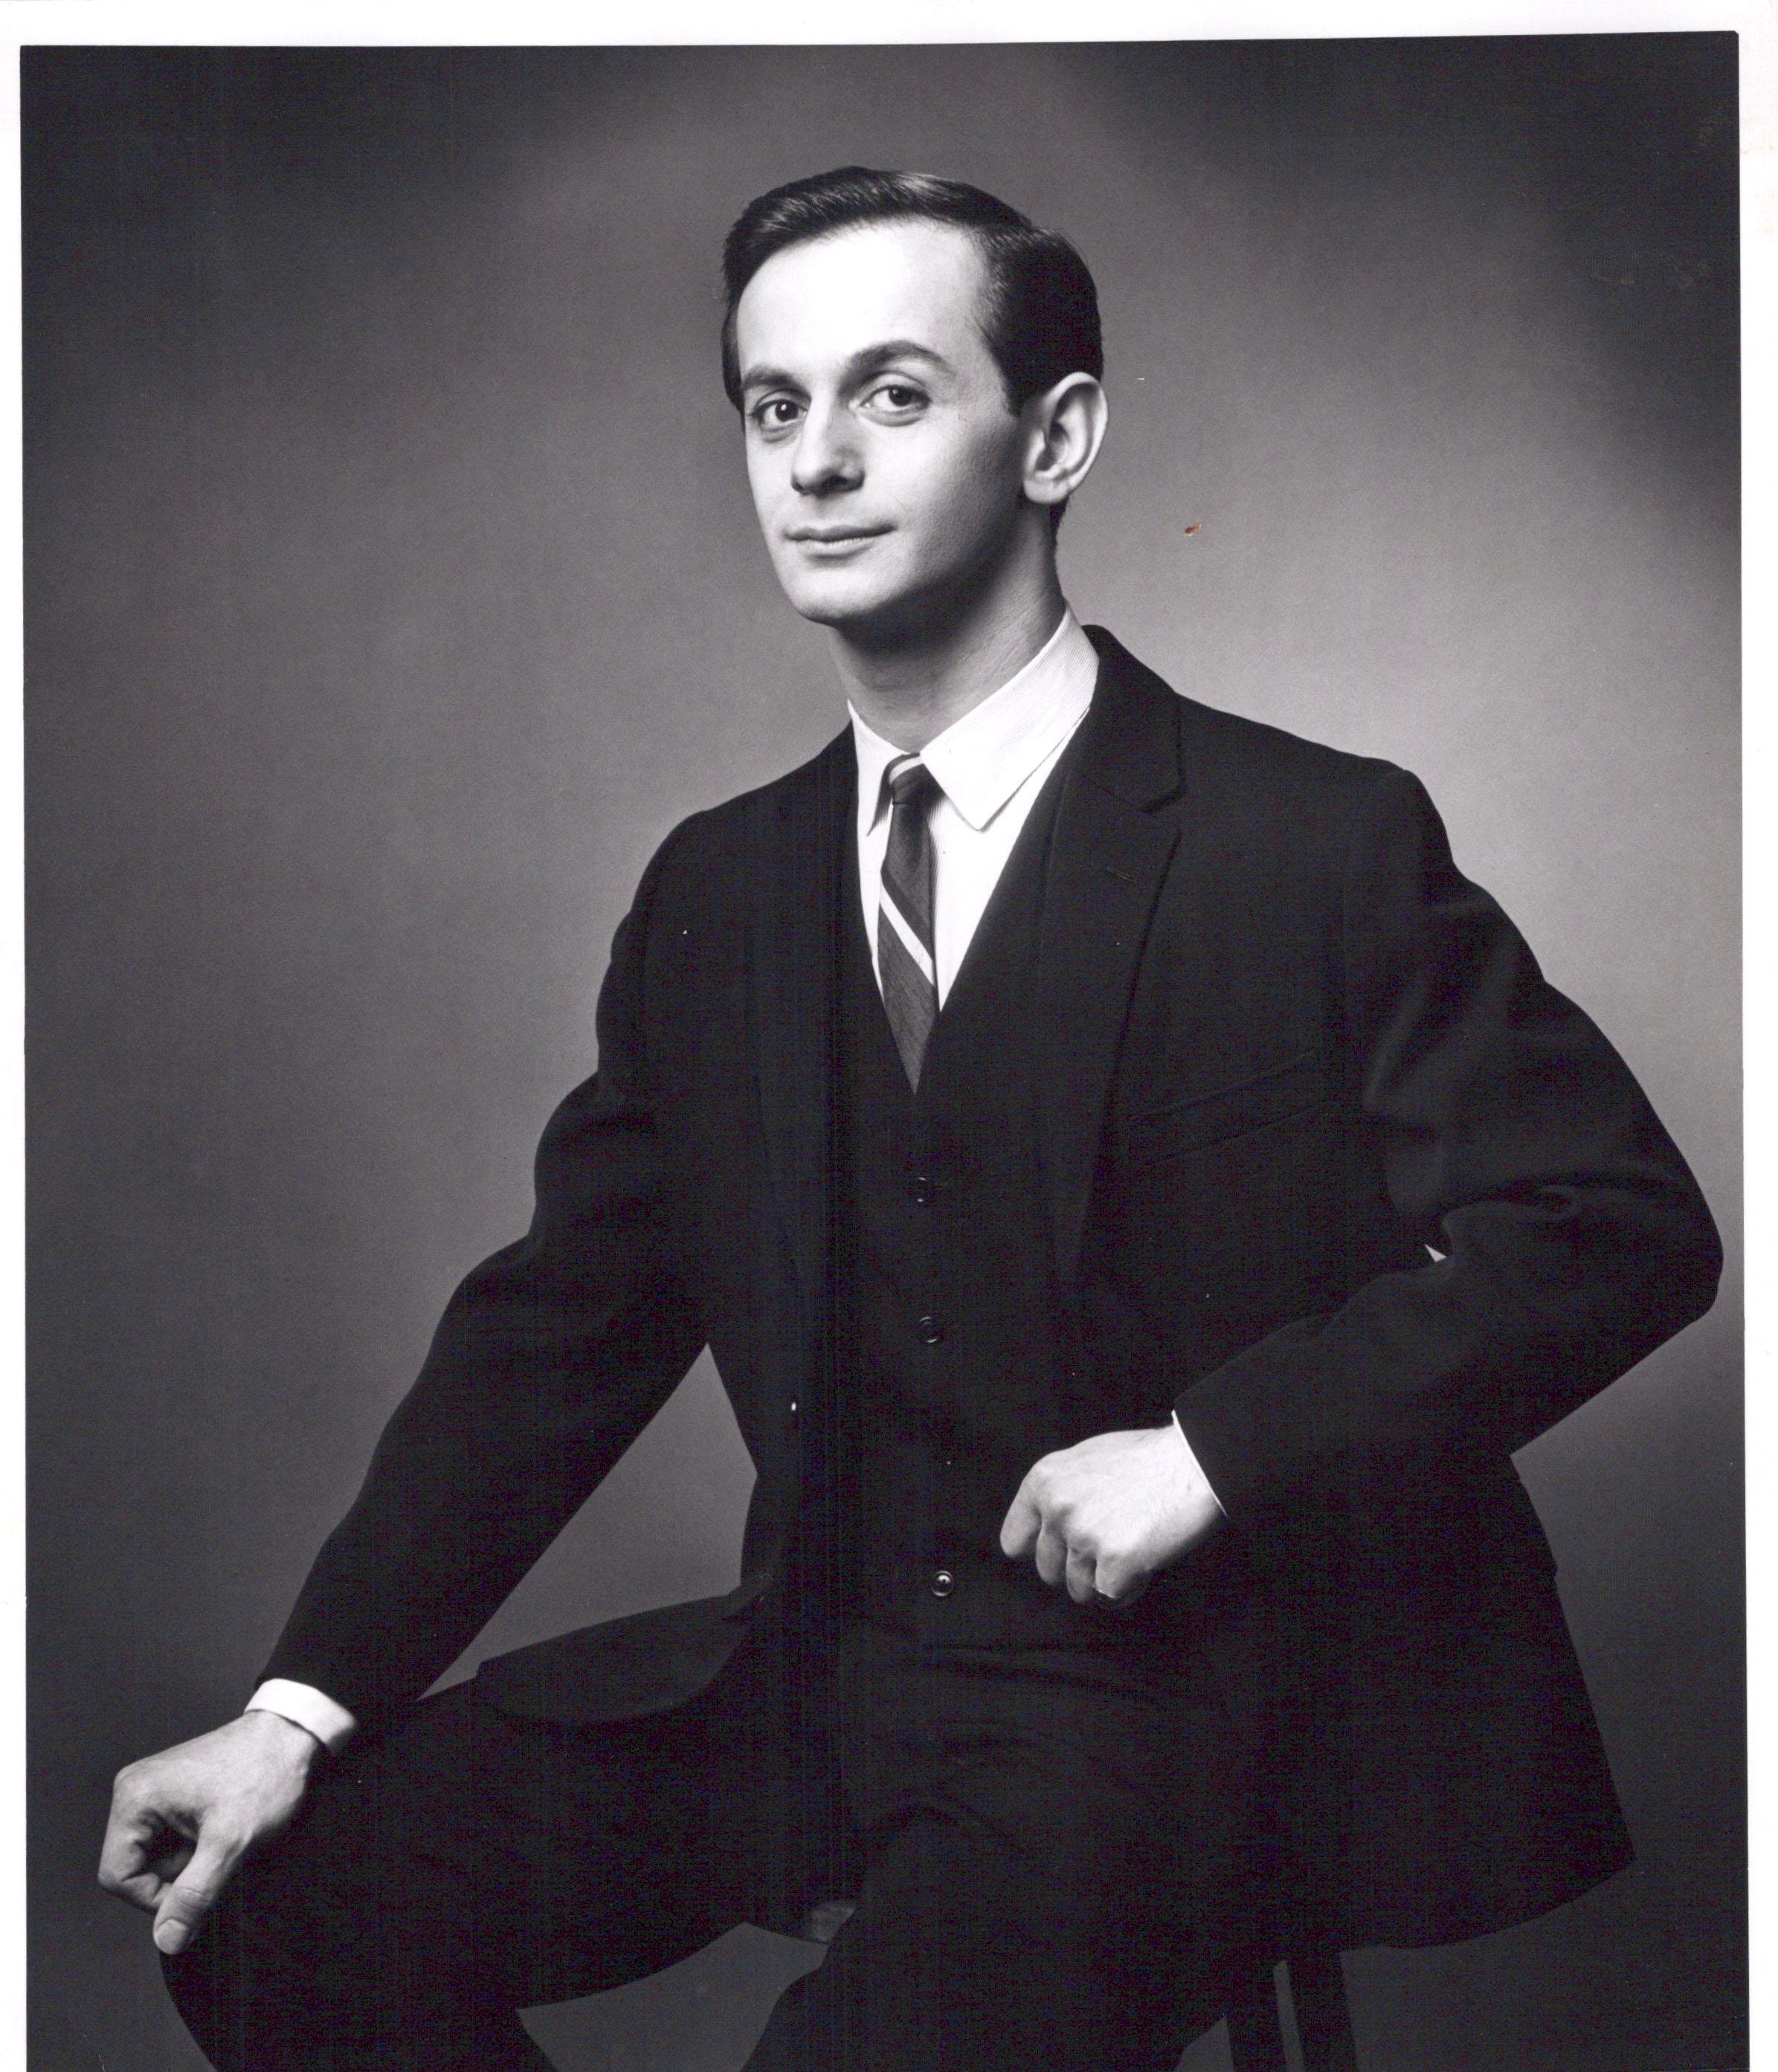 Jack Mitchell Portrait Photograph - Dancer, Choreographer & Company Founder Robert Joffrey  